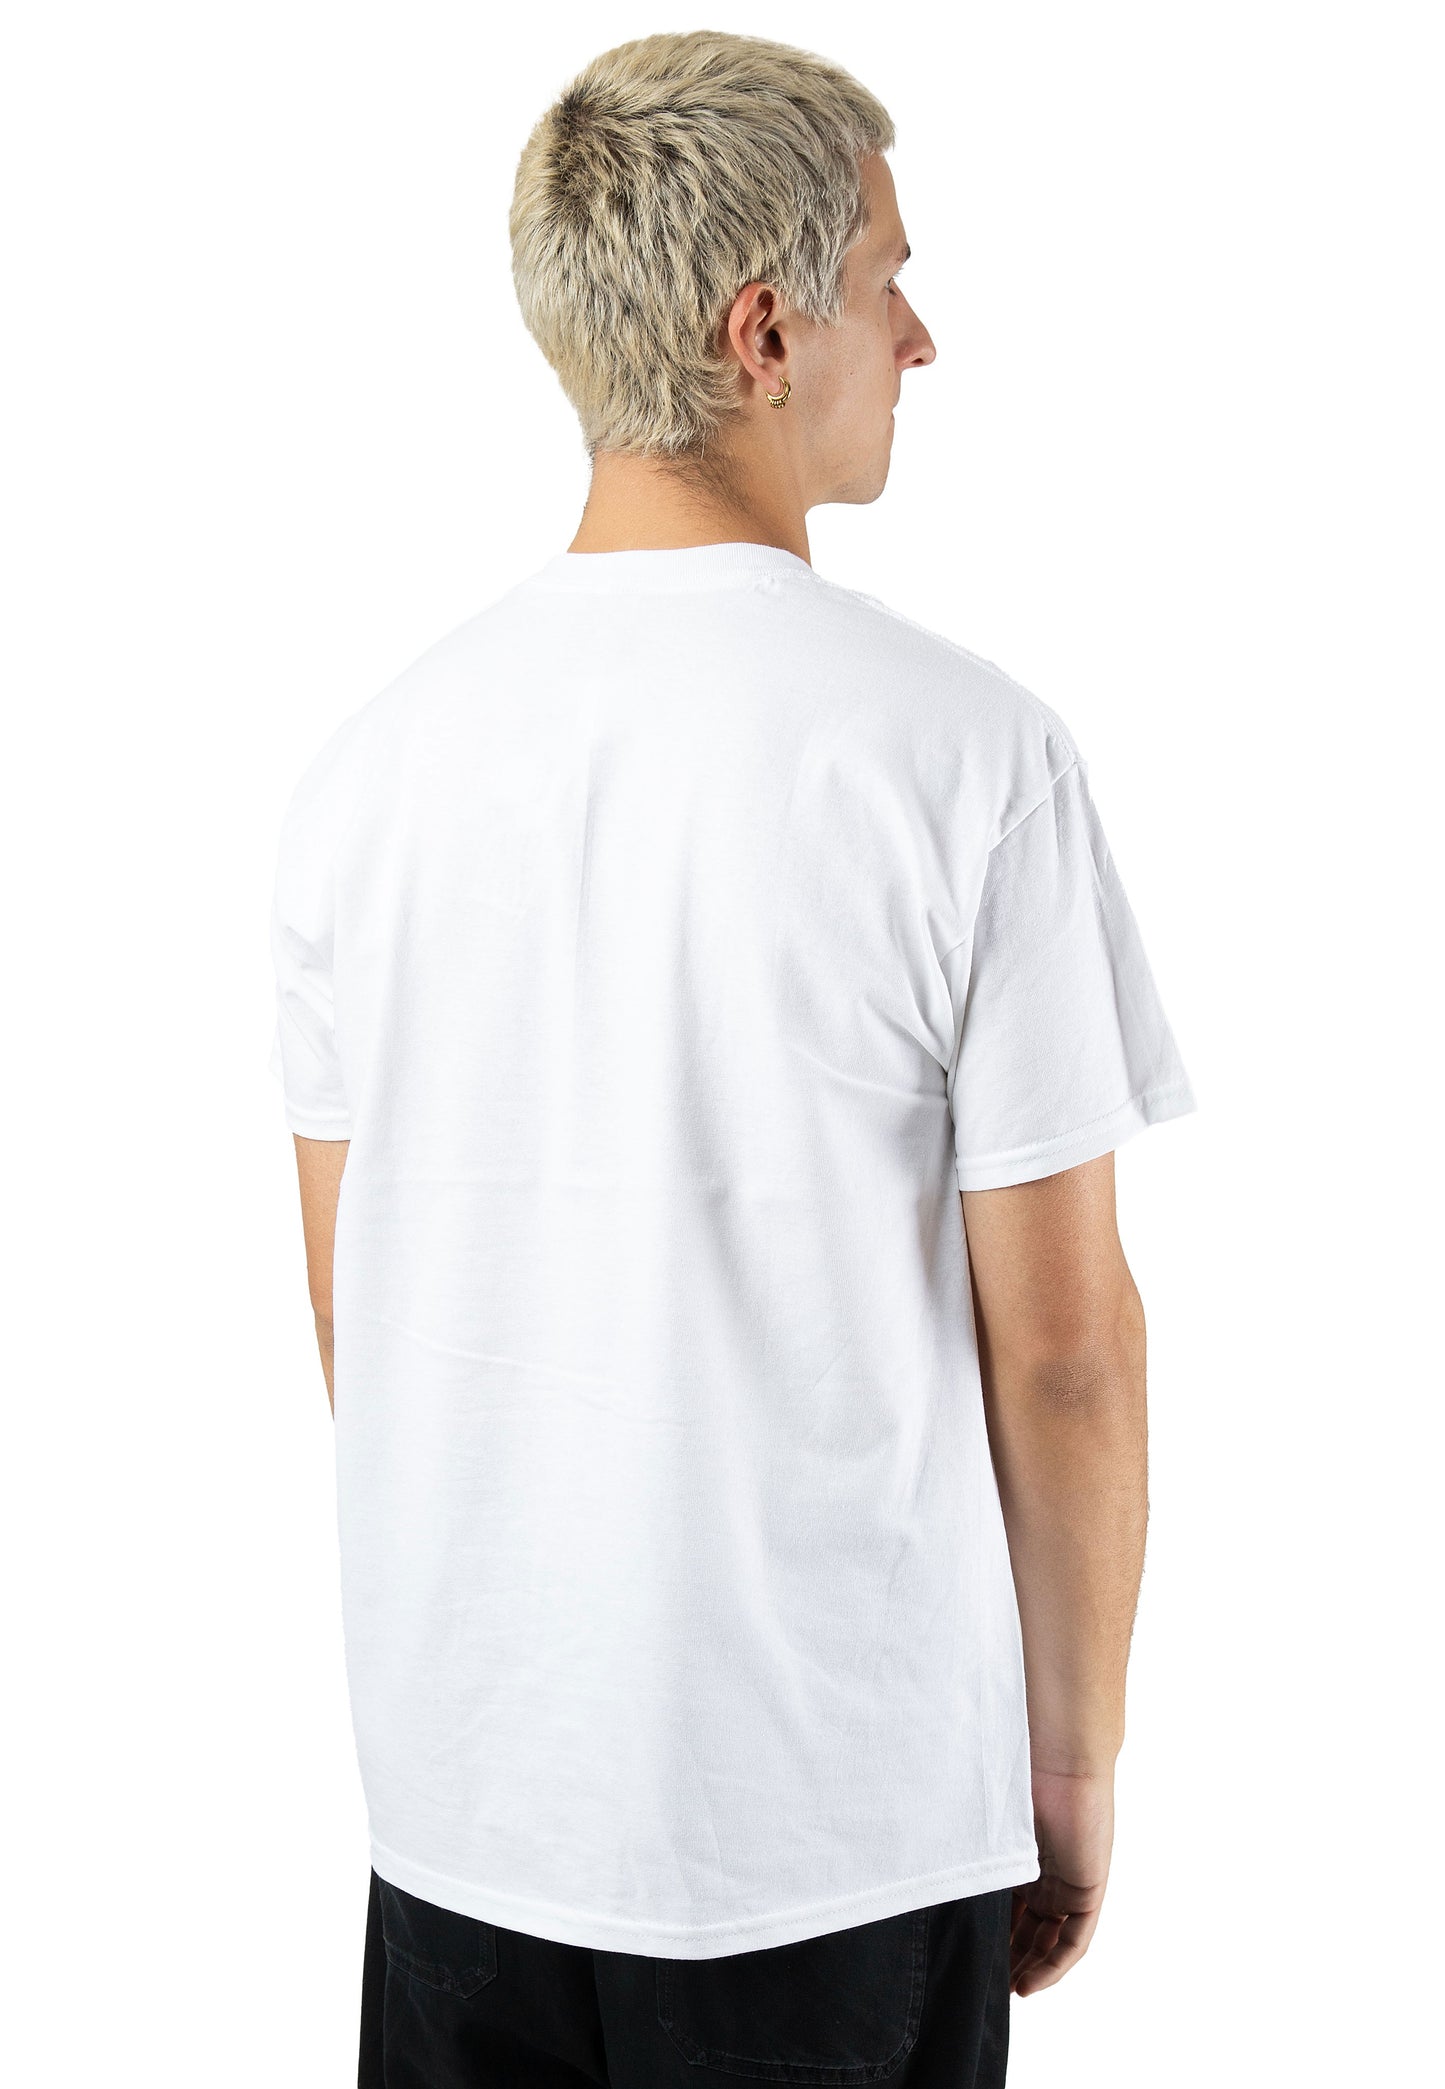 Neck Deep - Neck Deep Special Pack White - T-Shirt